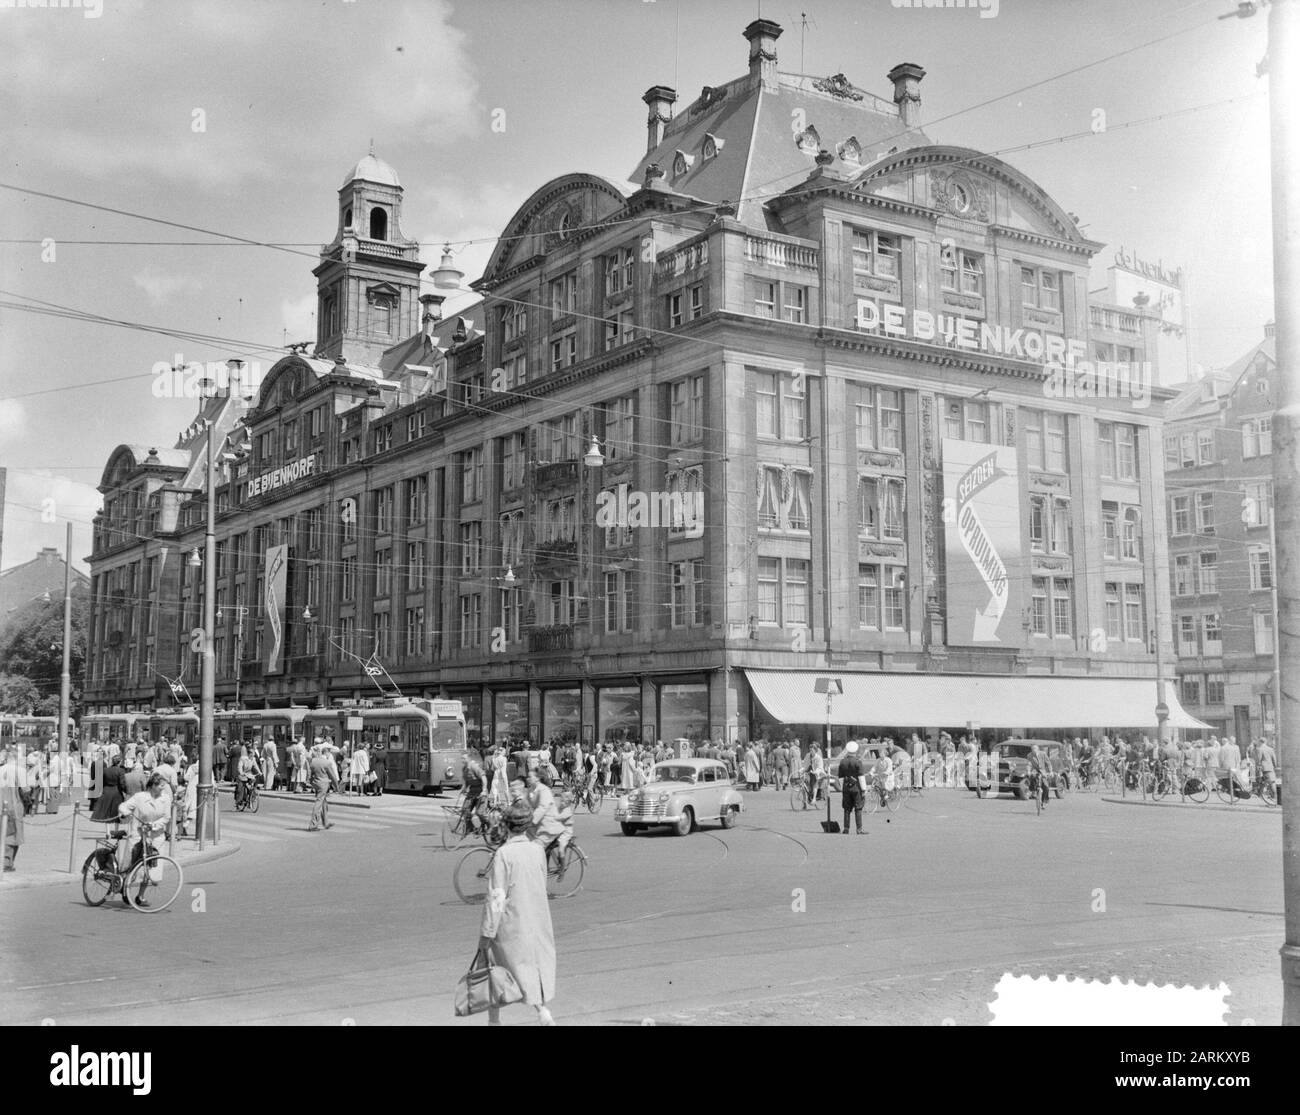 Department store De Bijenkorf in Amsterdam Date: 18 July 1952 Location:  Amsterdam, Noord-Holland Keywords: buildings, city sculptures, department  stores Stock Photo - Alamy